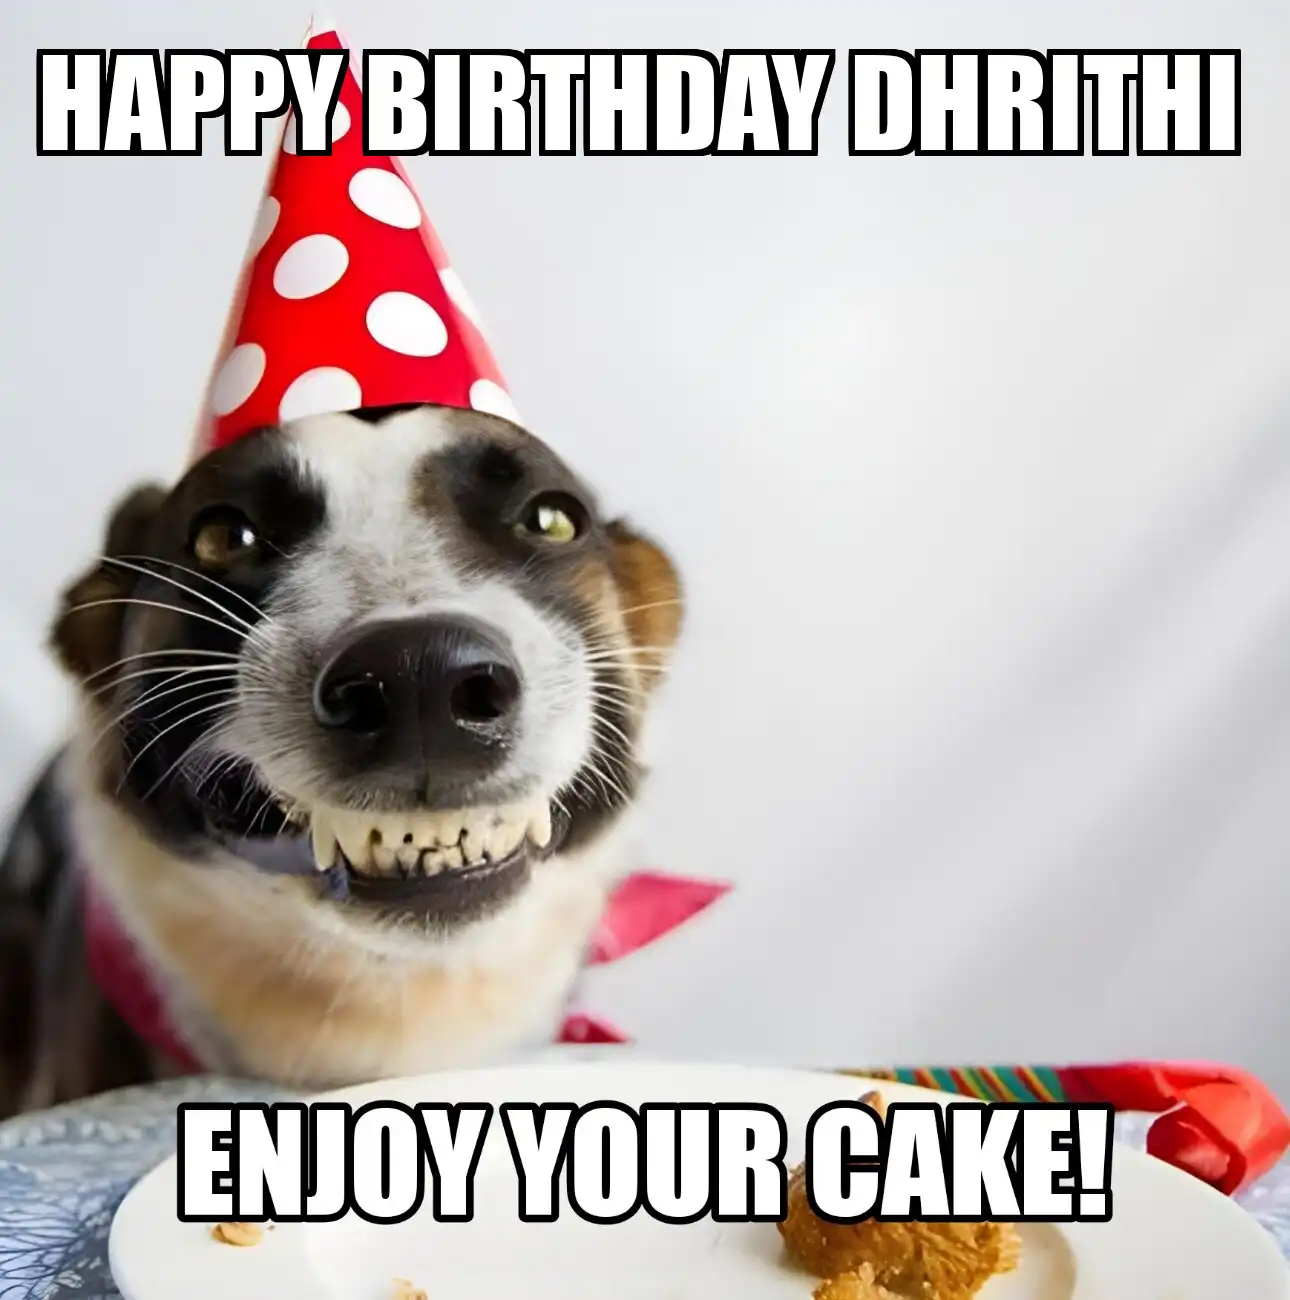 Happy Birthday Dhrithi Enjoy Your Cake Dog Meme